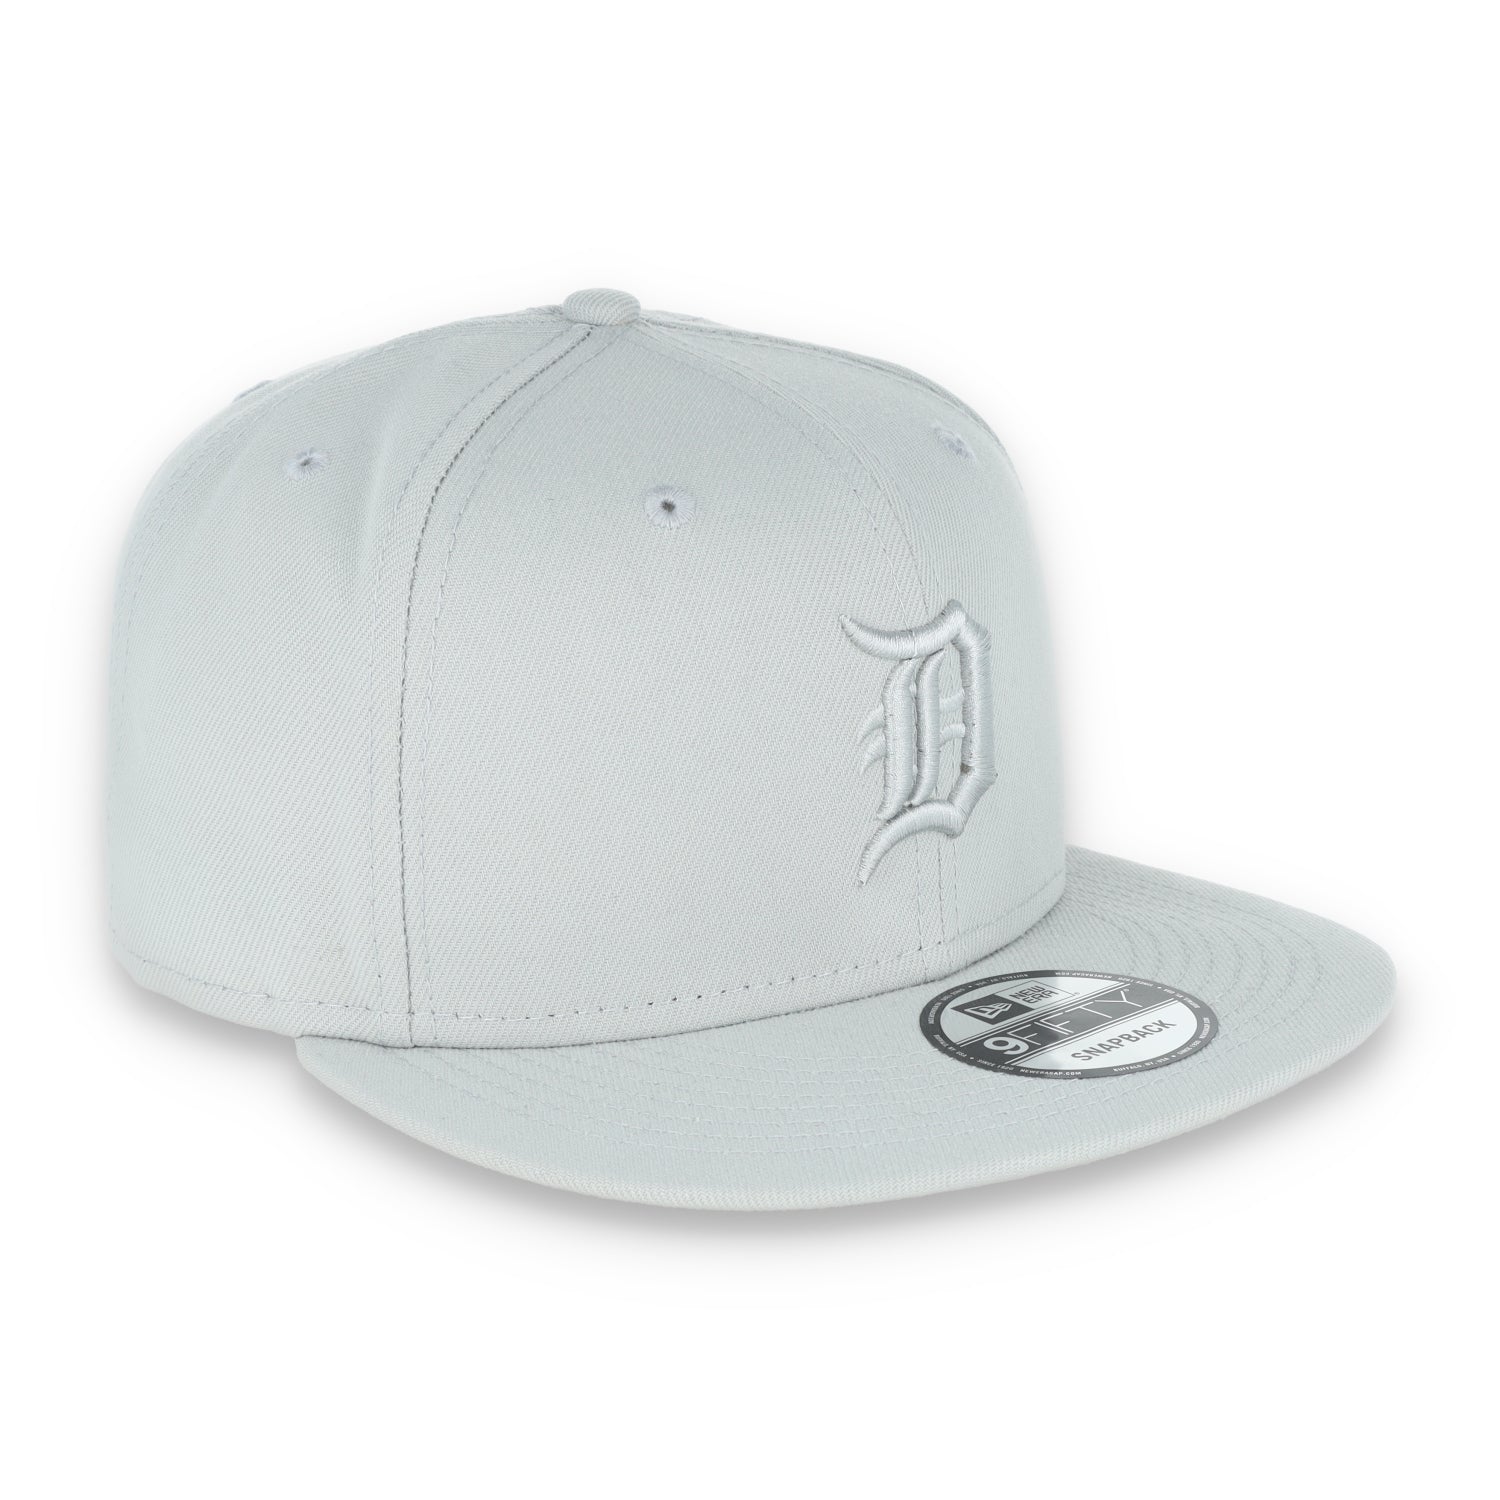 Detroit Tigers New Era Gray 9FIFTY Snapback Hat-GREY